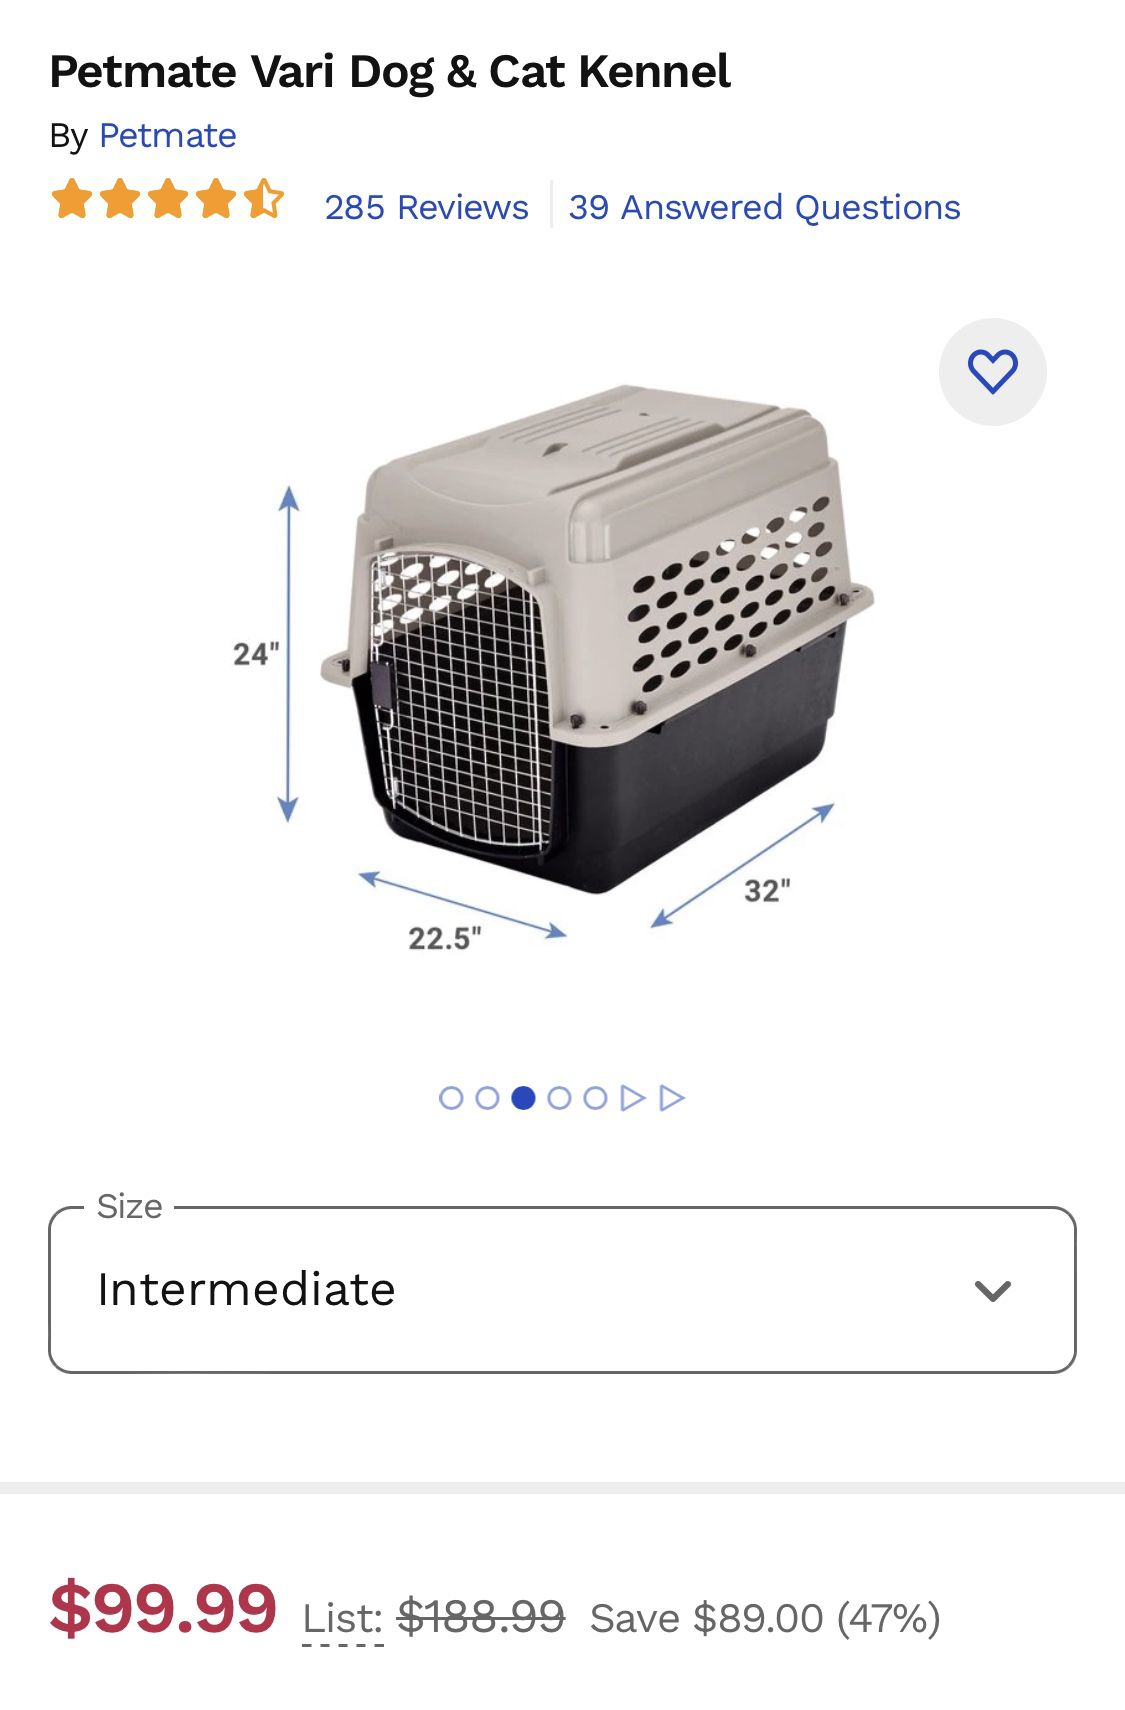 Petmate 32” Dog Crate